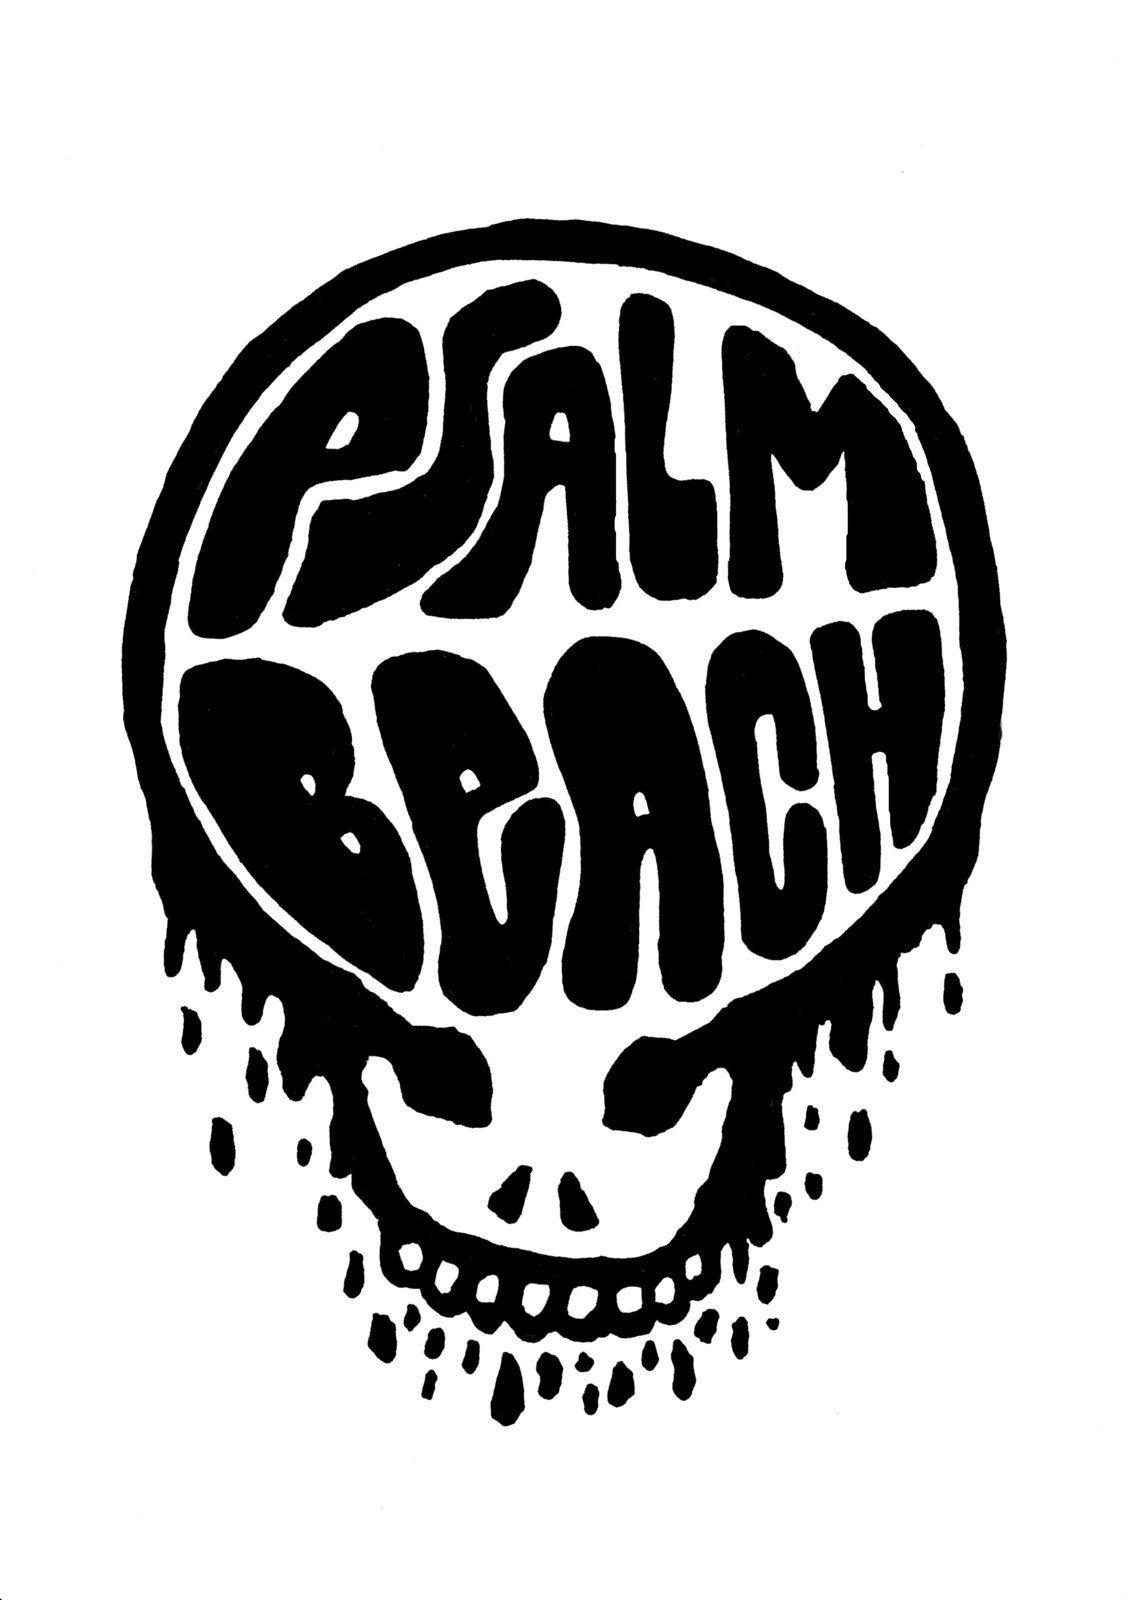 Psalm Beach